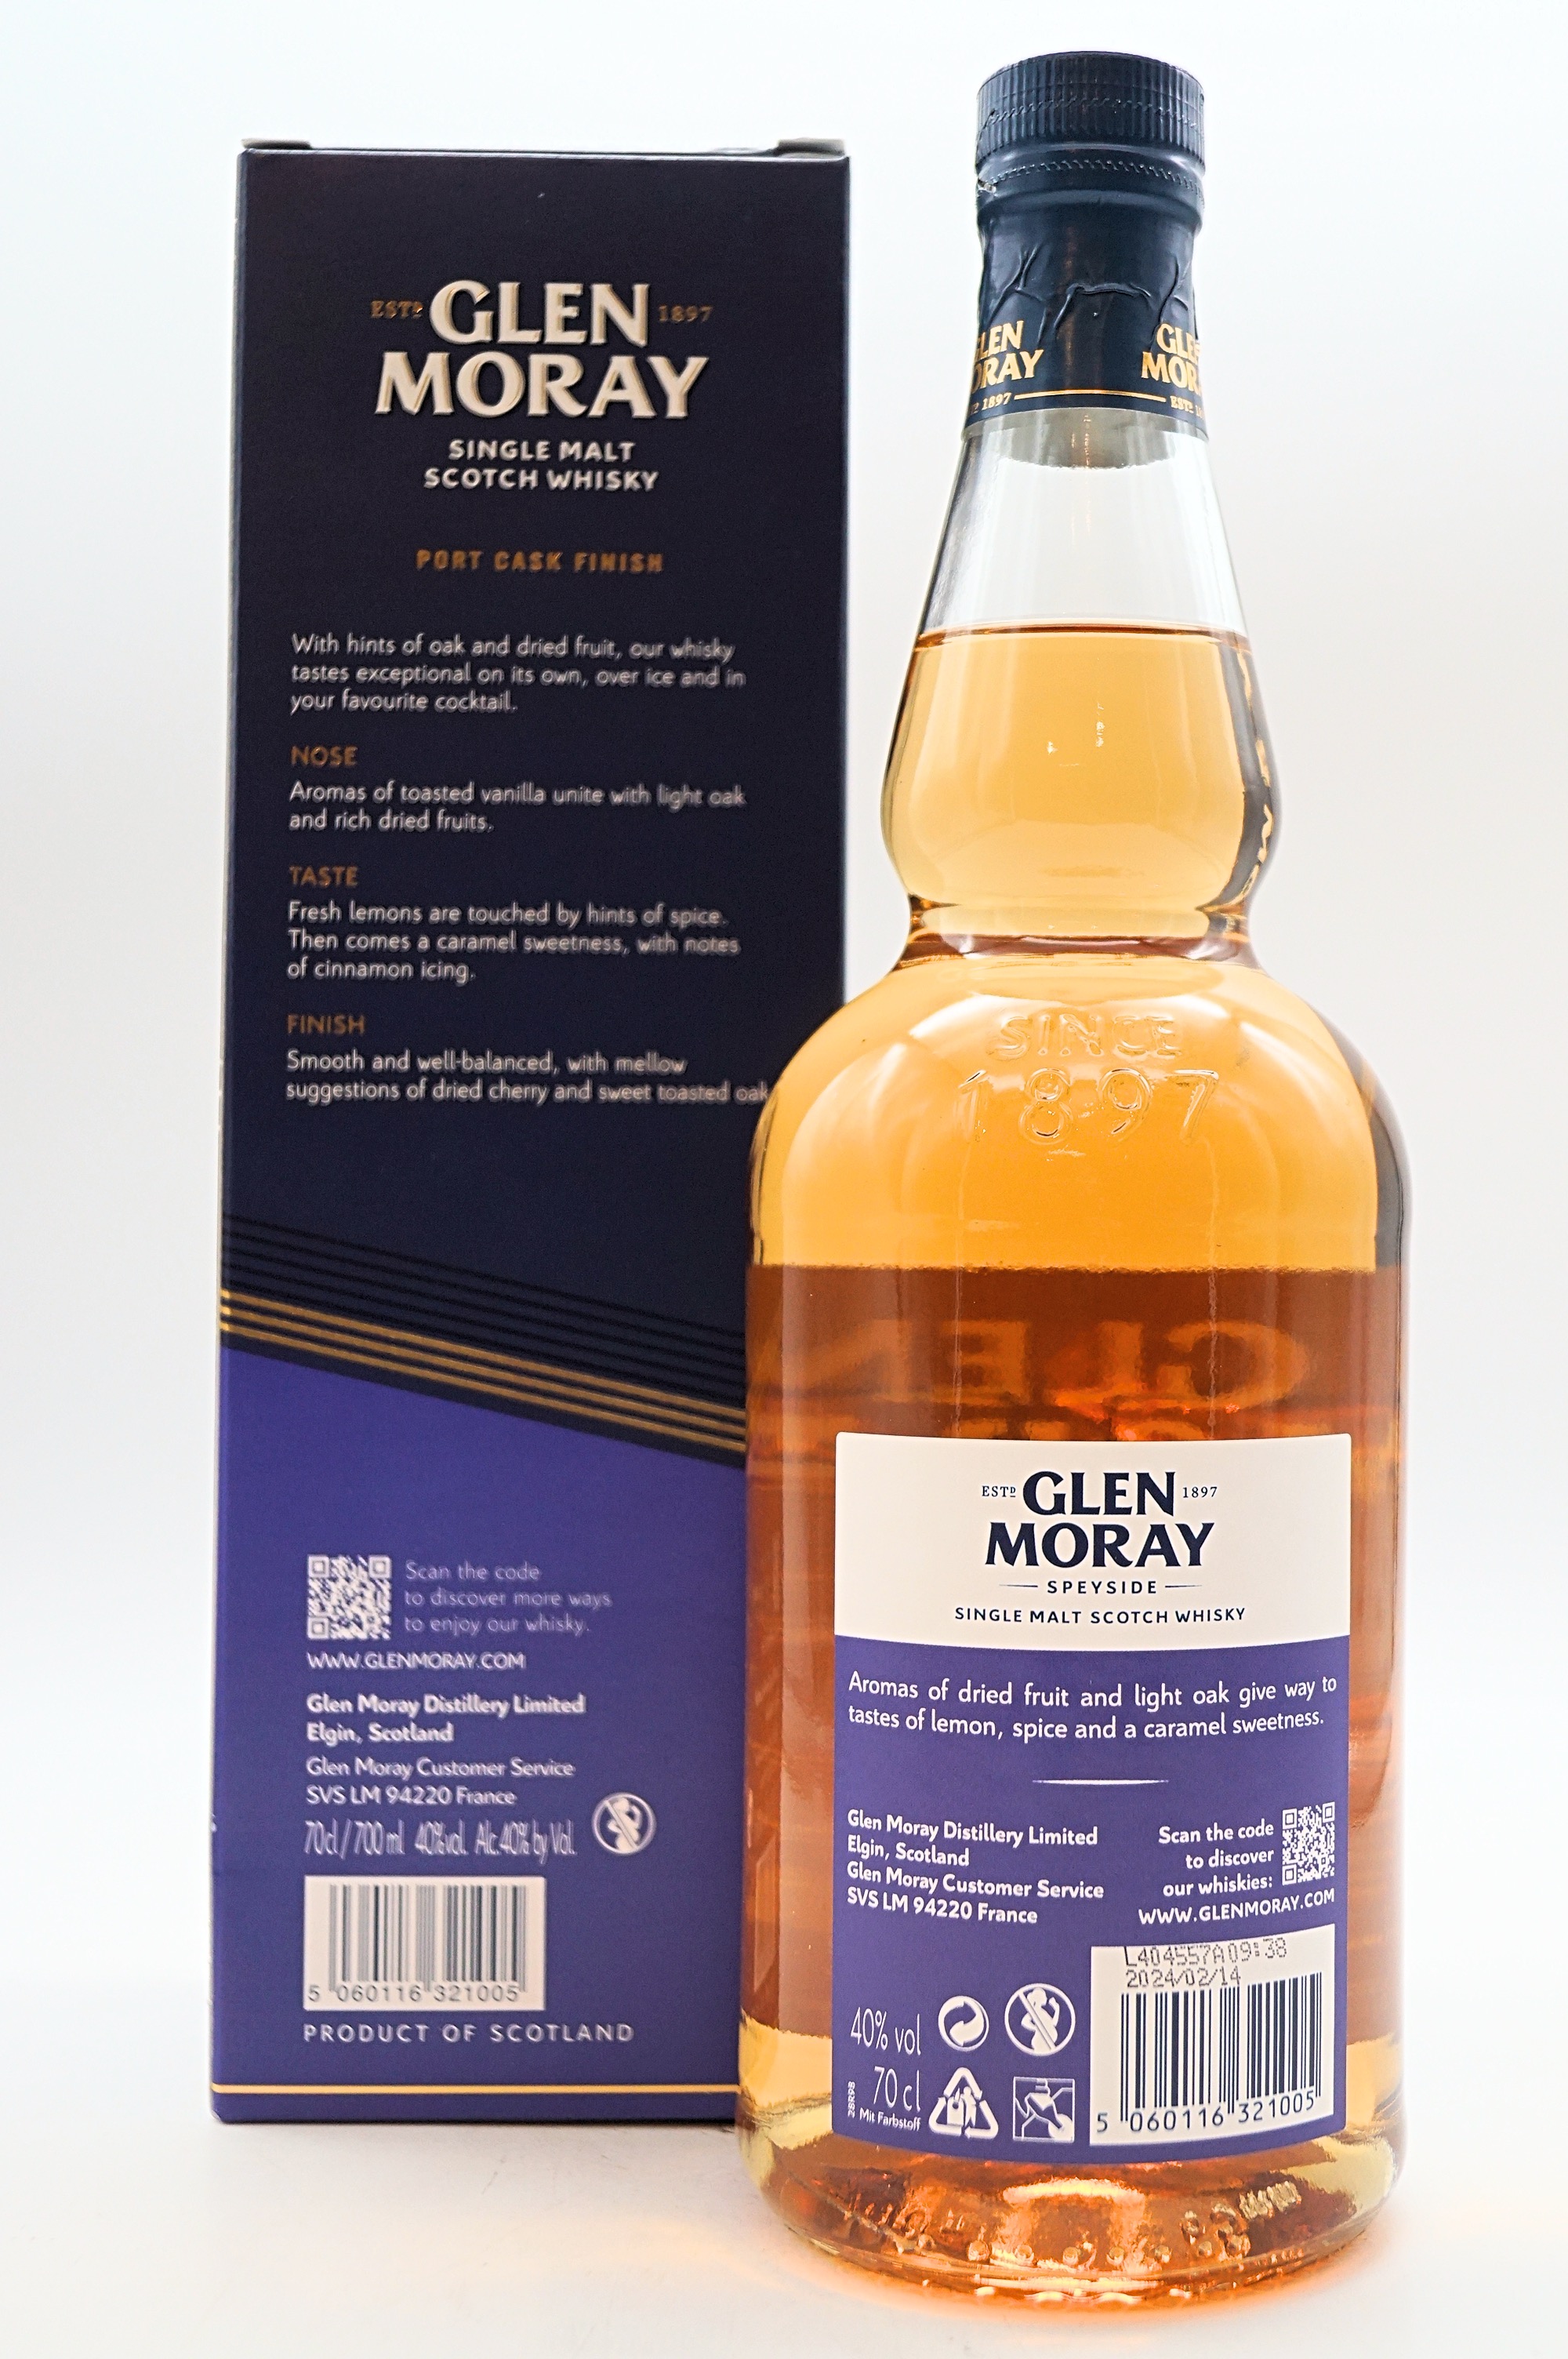 Elgin Classic Port Cask Finish Single Malt Scotch Whisky